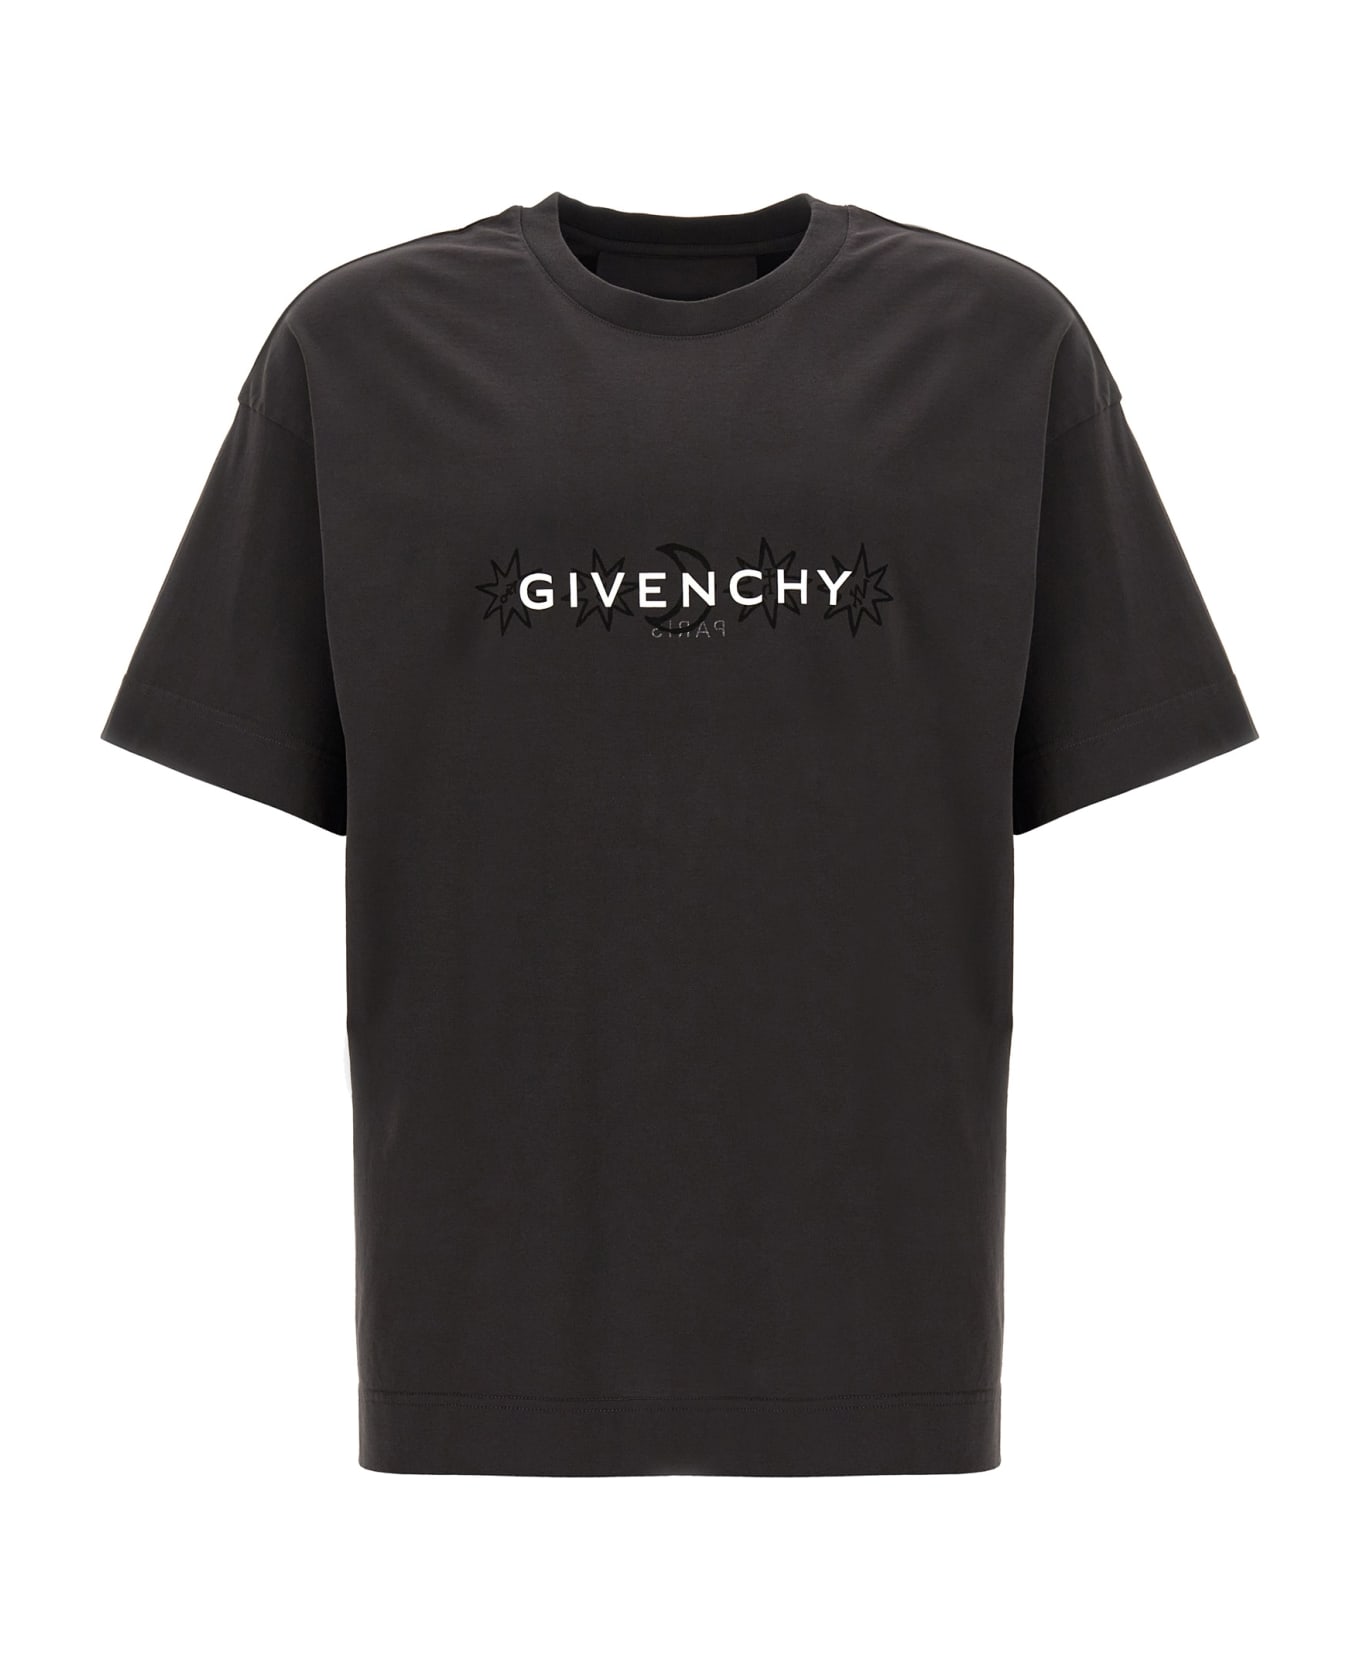 Givenchy Printed T-shirt - Rosewood